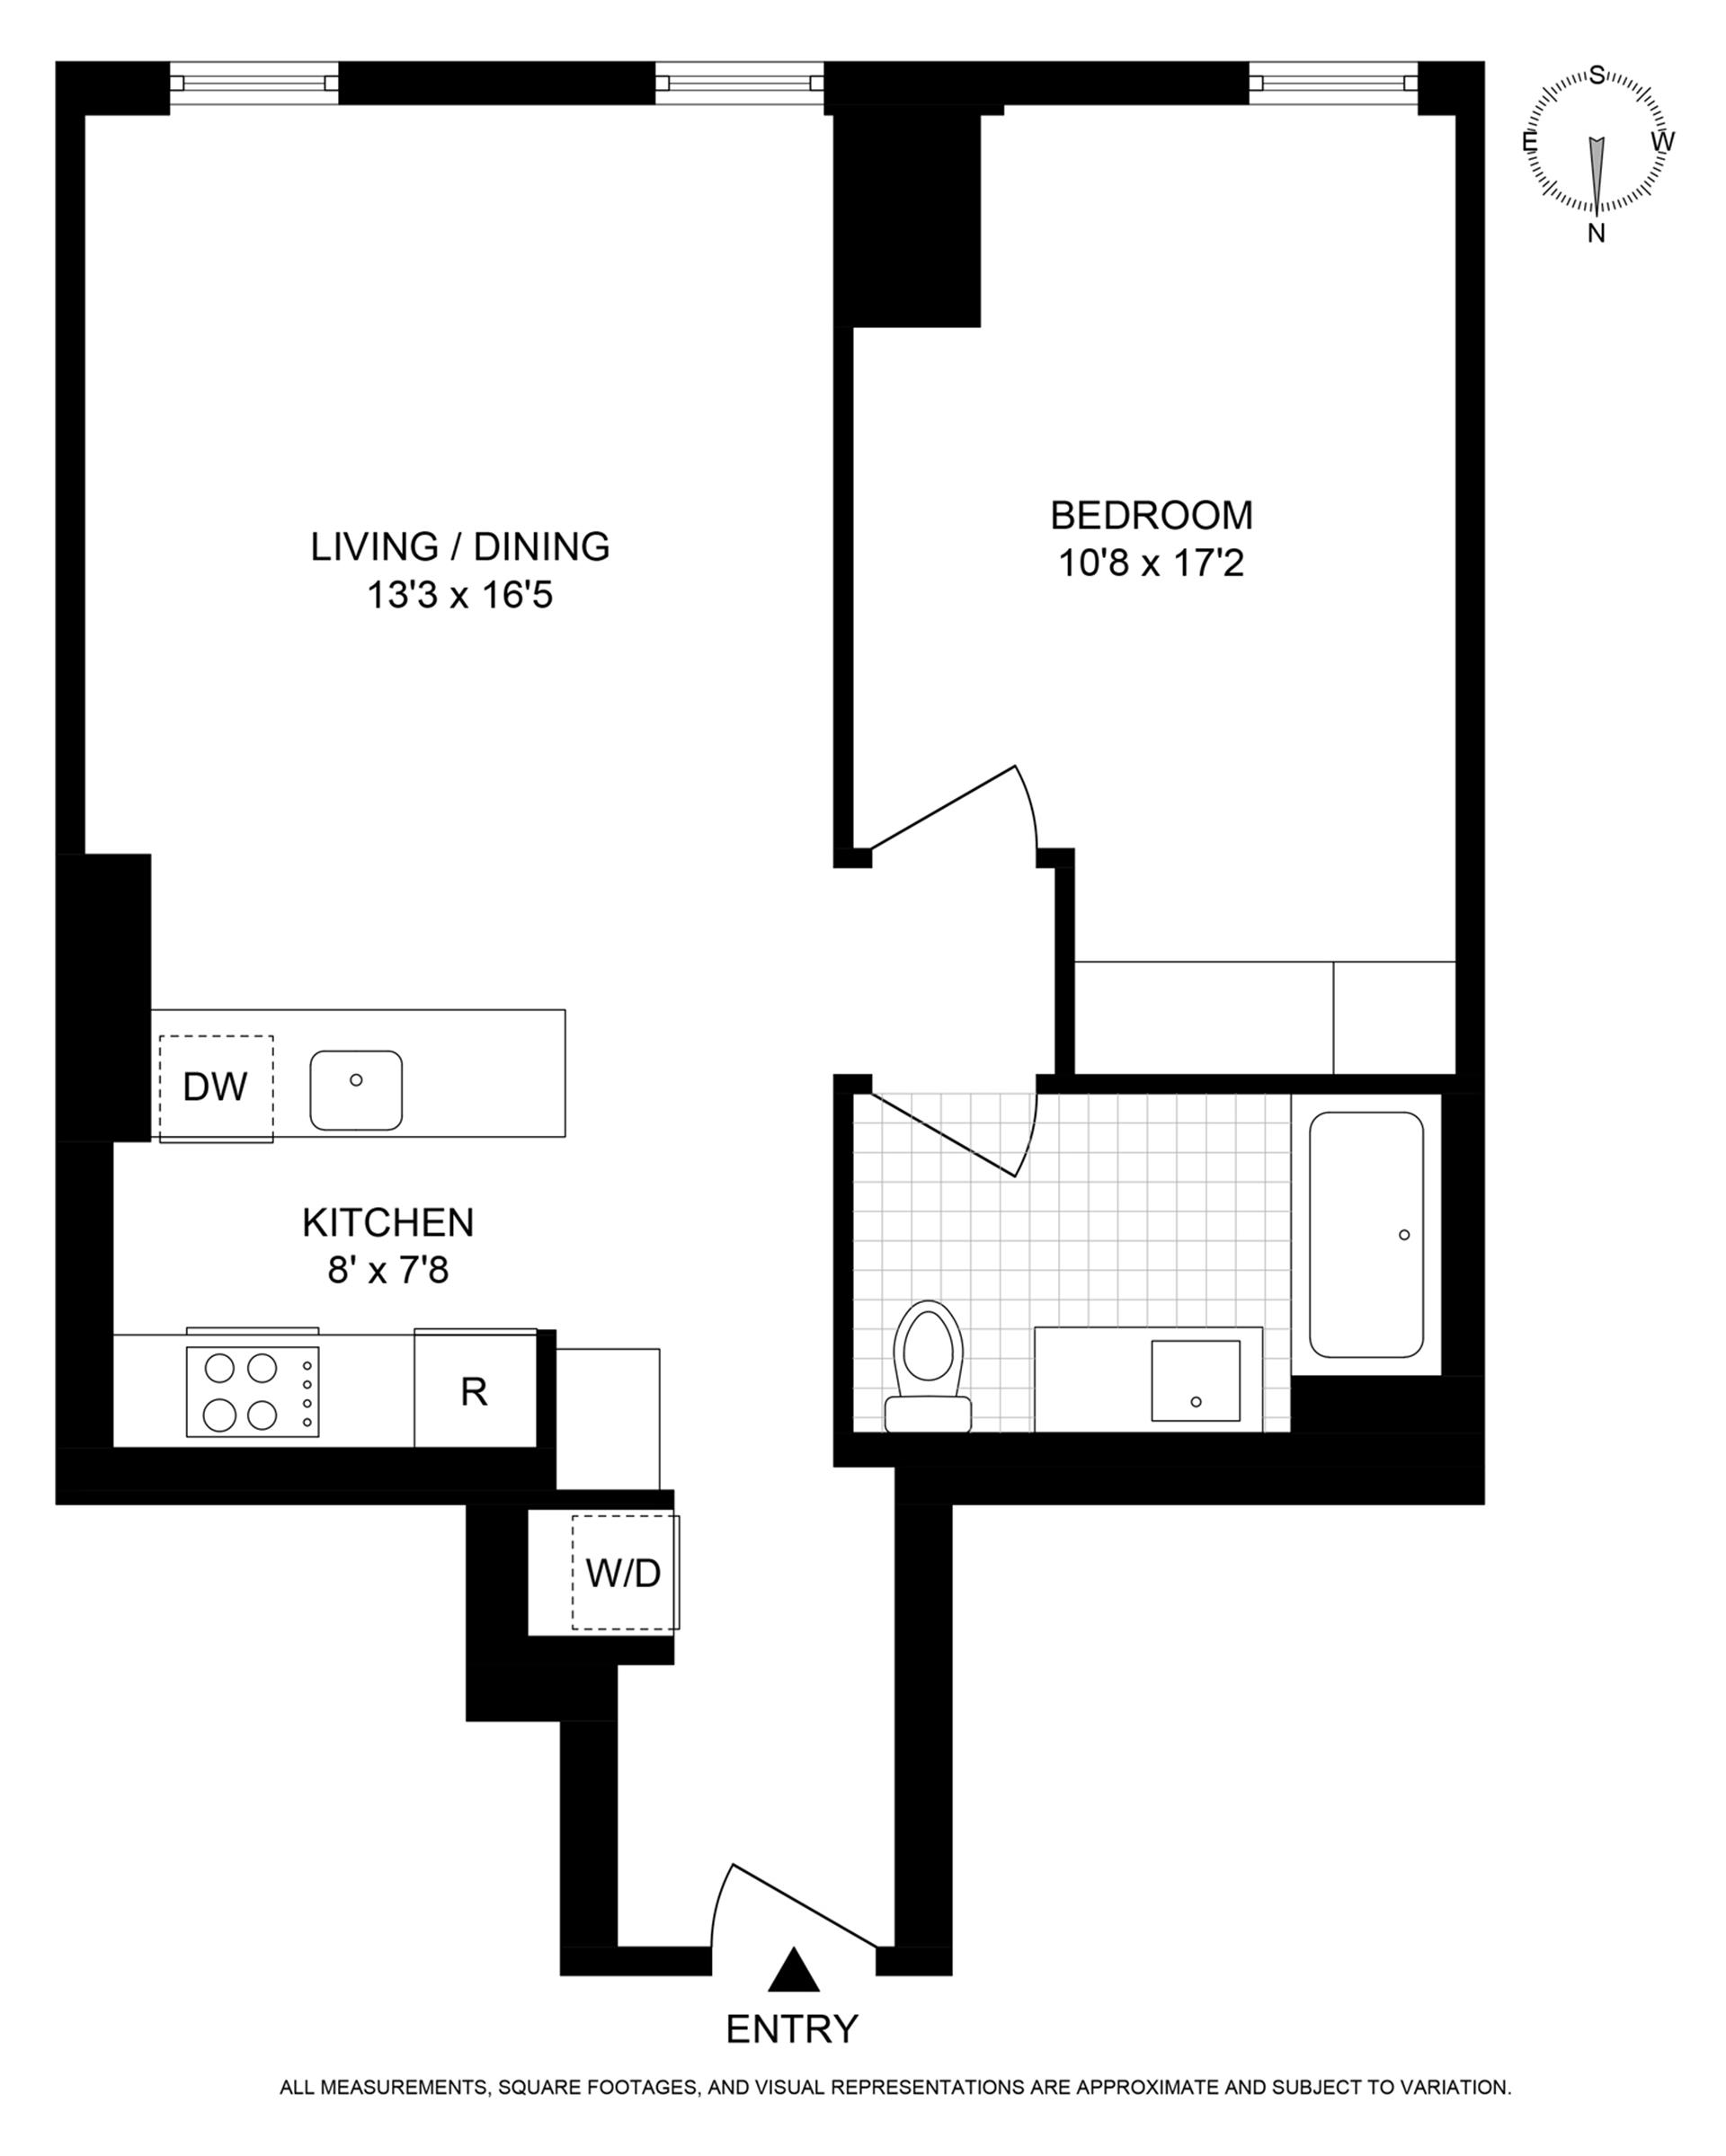 Floorplan for 540 West 49th Street, 407S